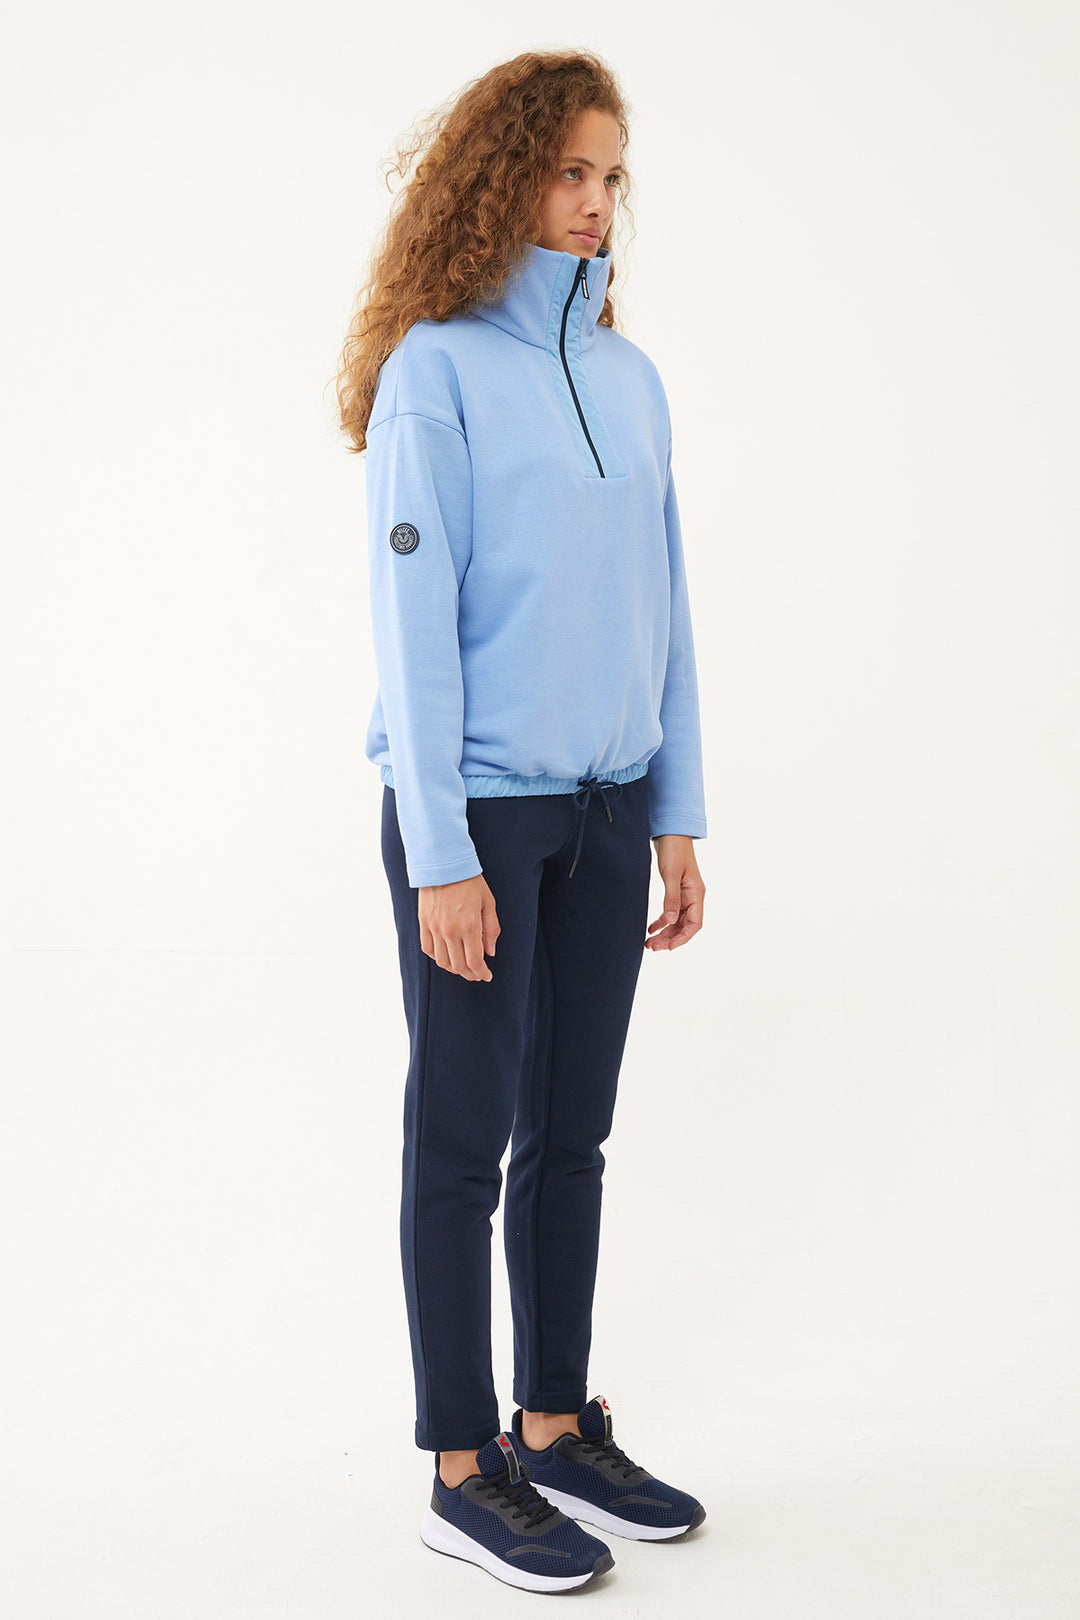 Damen-Sweatshirt-Trainingsanzug mit halbem Reißverschluss